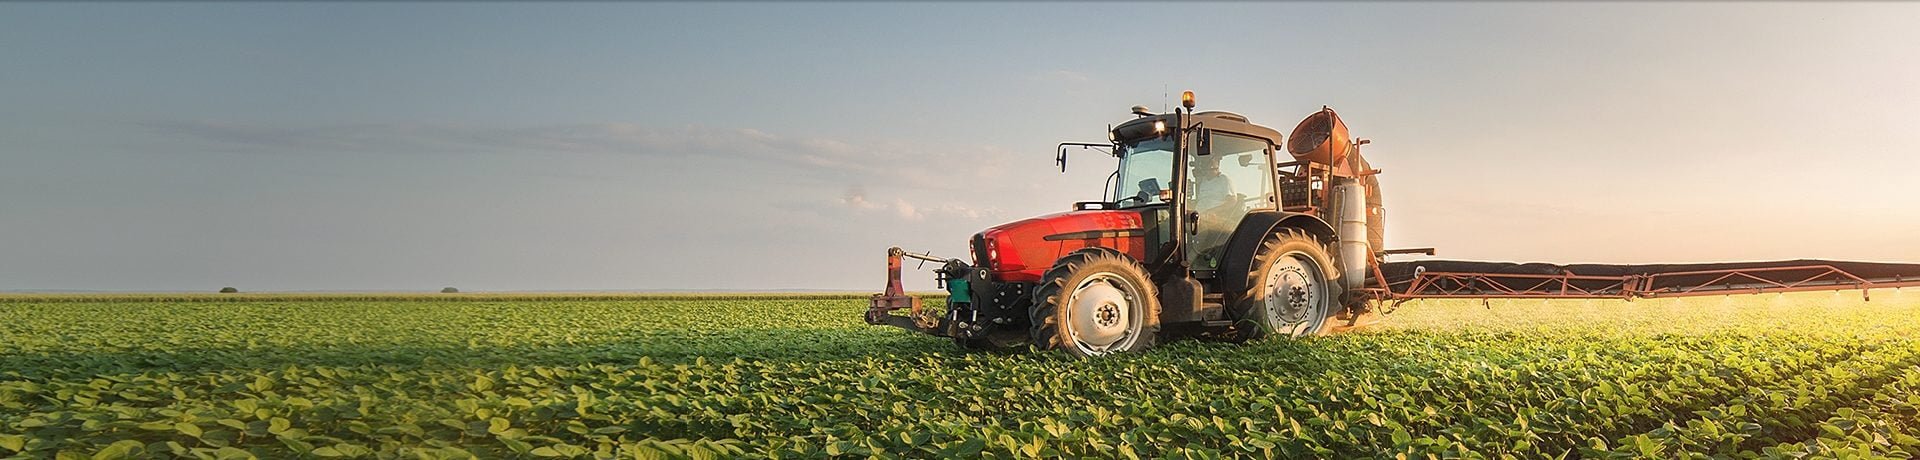 Agricultural Machinery & Farm Equipment Lease